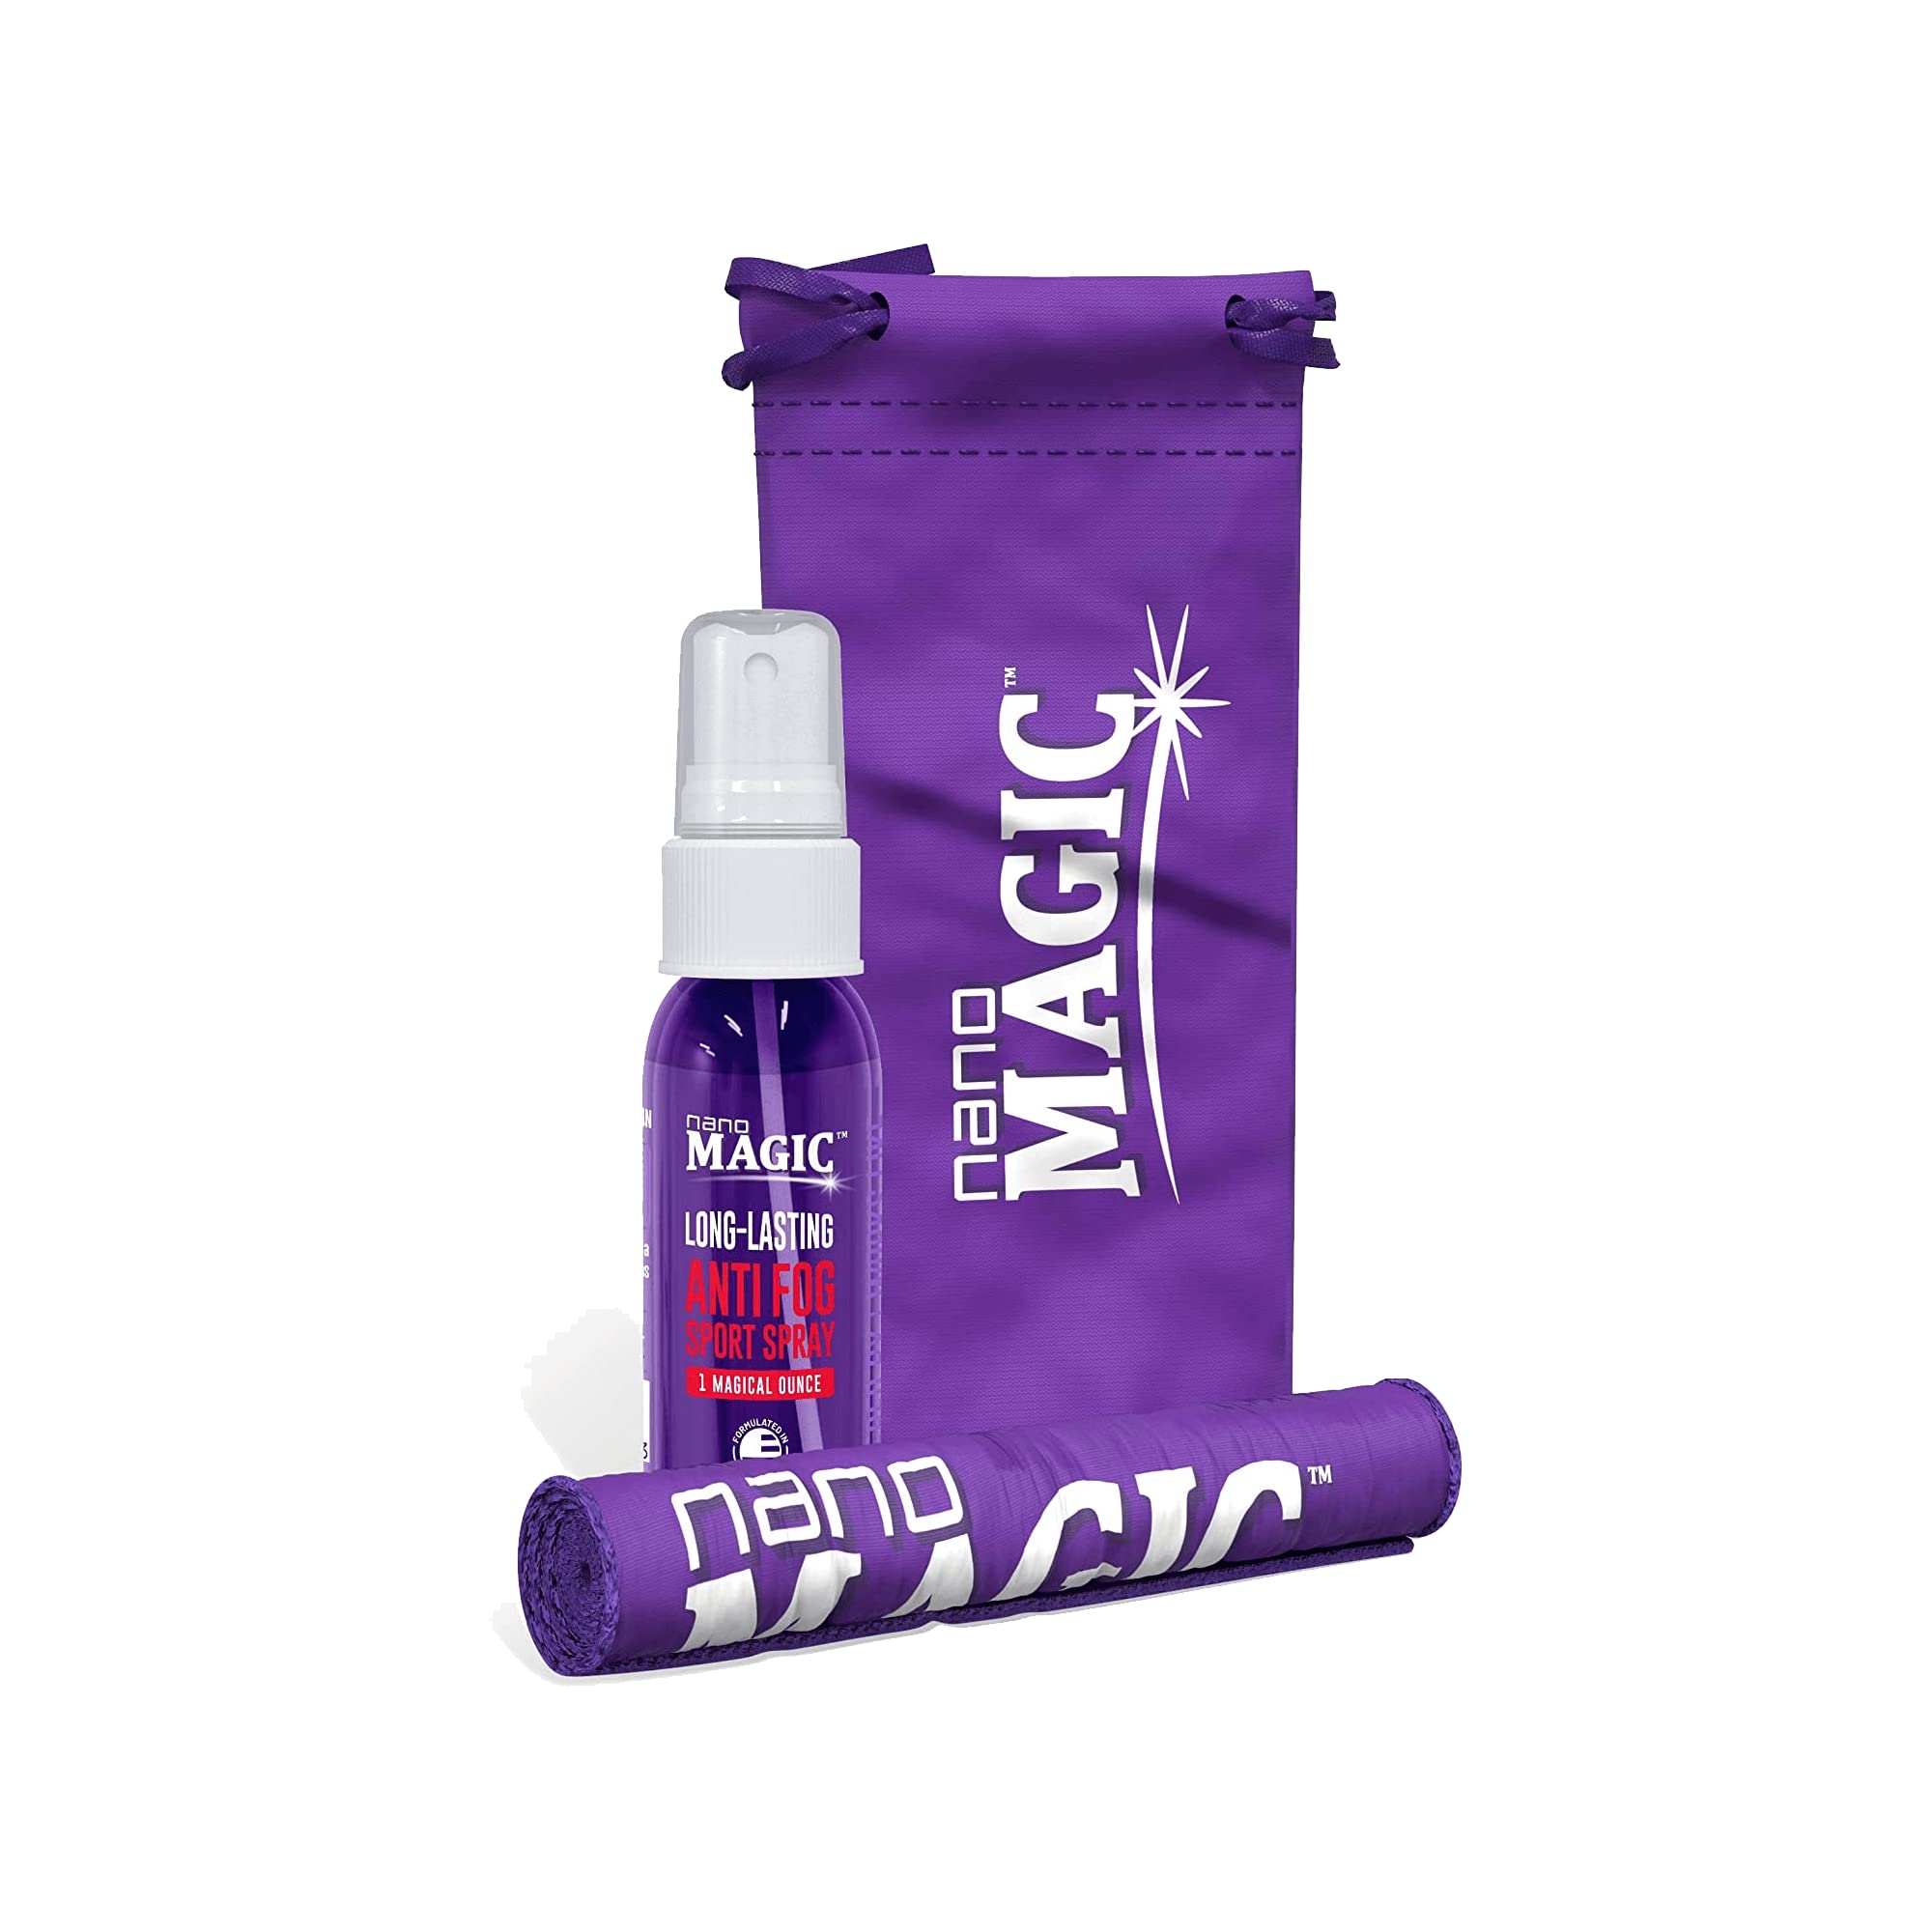 ''Nano Magic Anti Fog SPORT Spray 1 oz Travel Kit, Eyeglasses, SUNGLASSES, Goggles, Face Shield, Spor